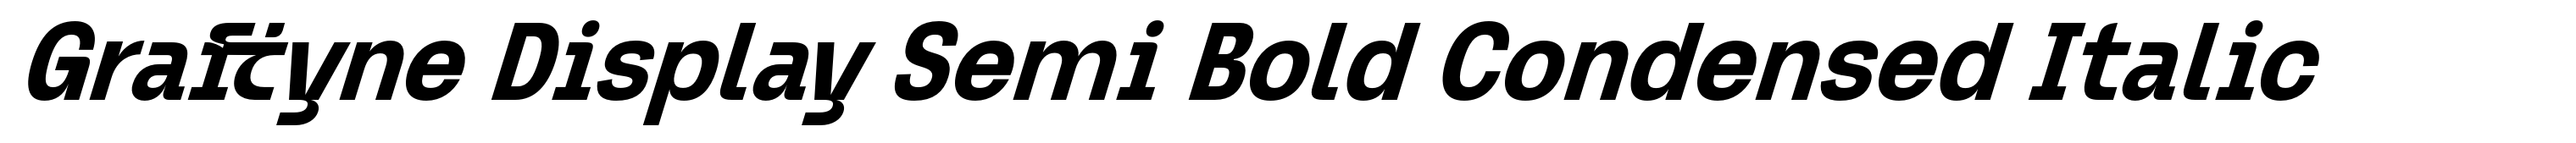 Graftyne Display Semi Bold Condensed Italic